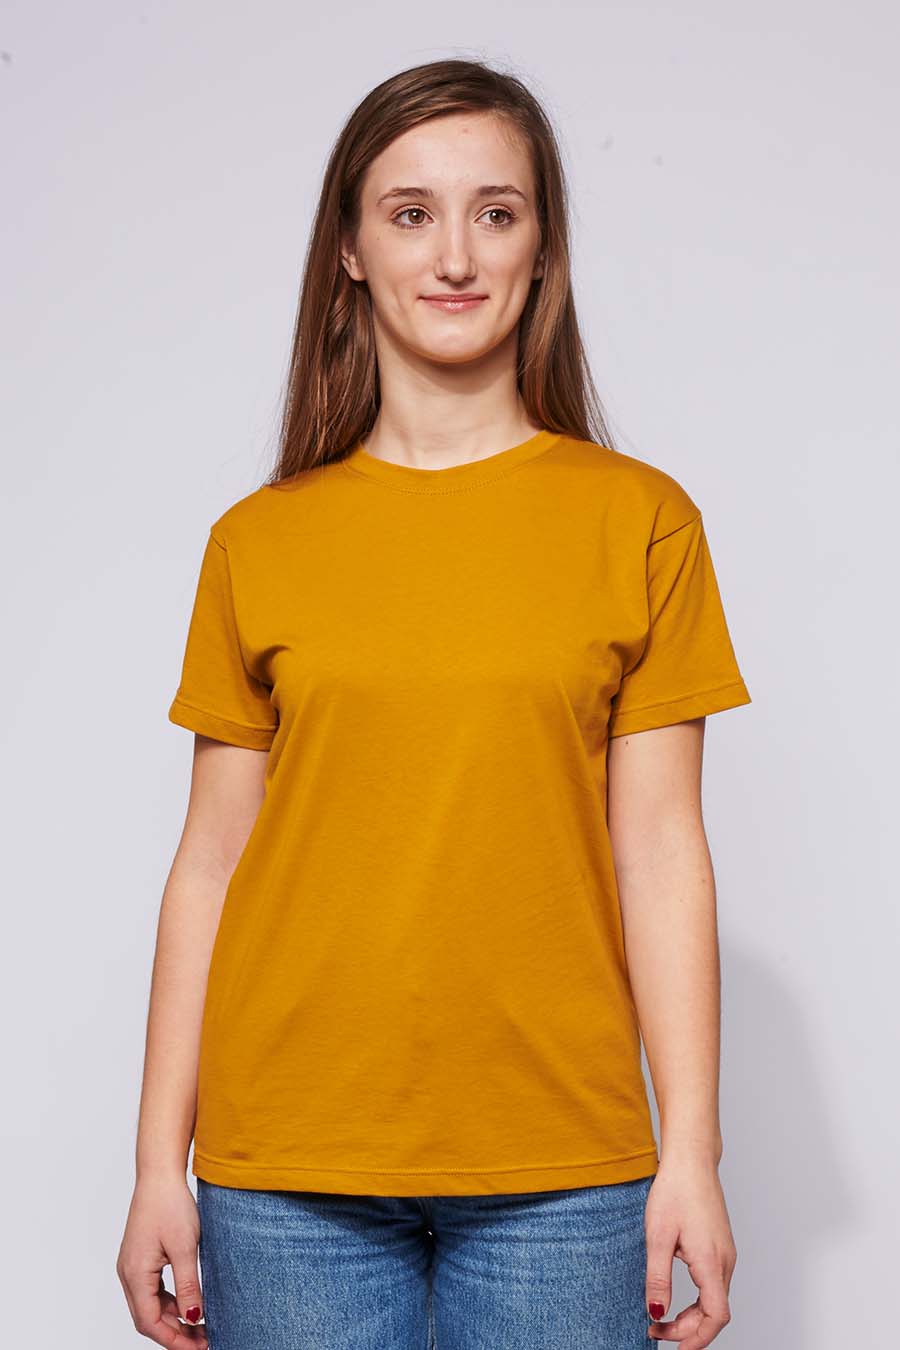 Tee-shirt Femme made in France en coton bio BRIGITTE moutarde - FIL ROUGE